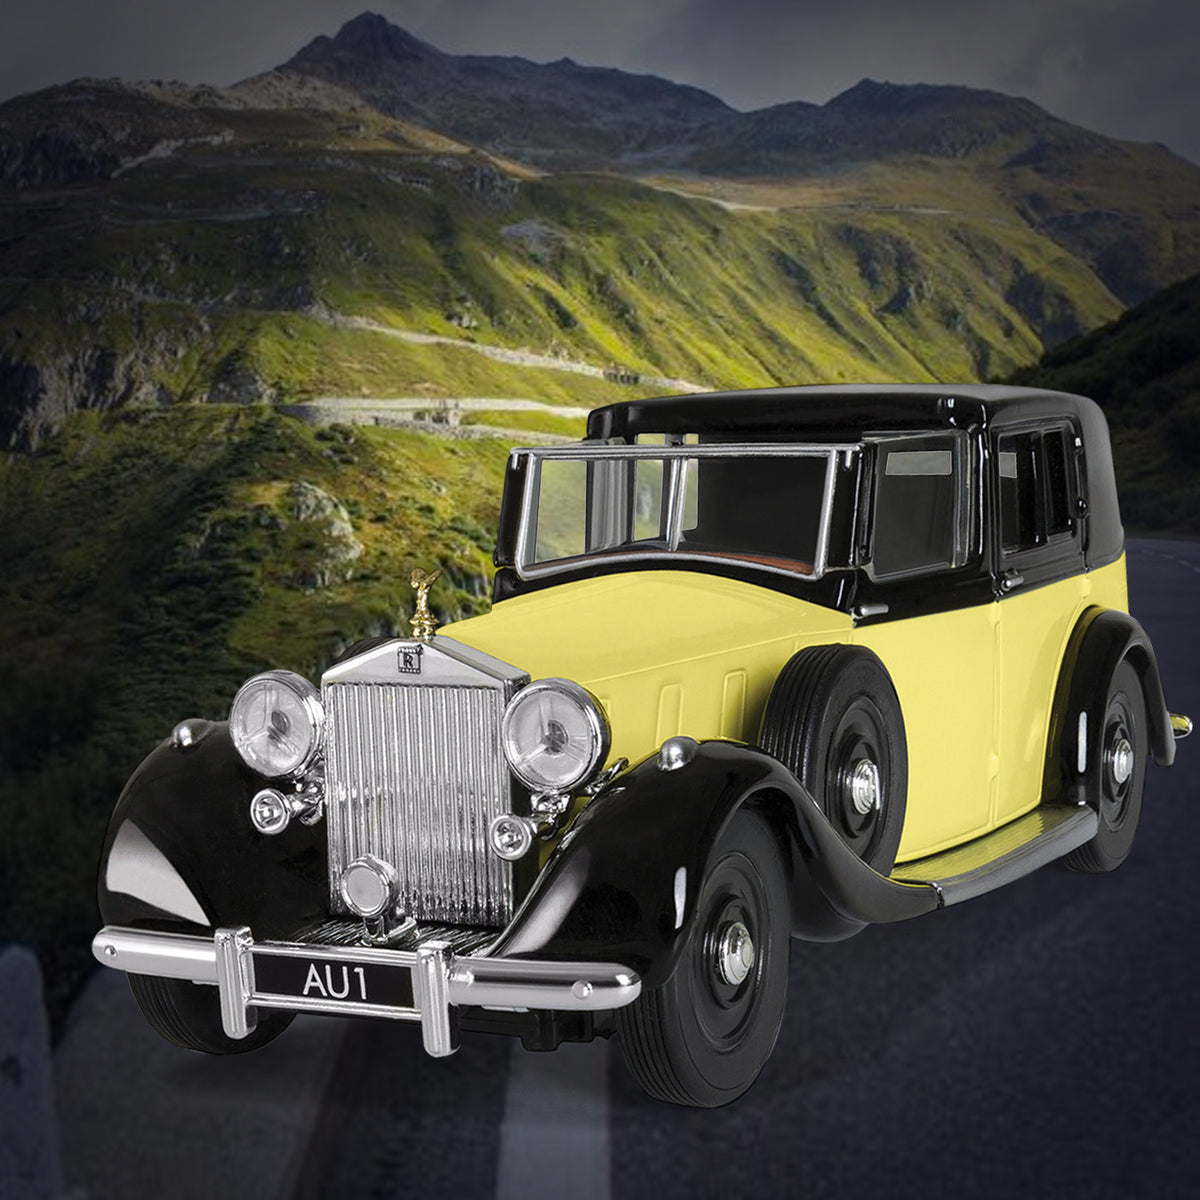 James Bond Rolls Royce Phantom III Modellauto - Goldfinger Edition - Von Corgi